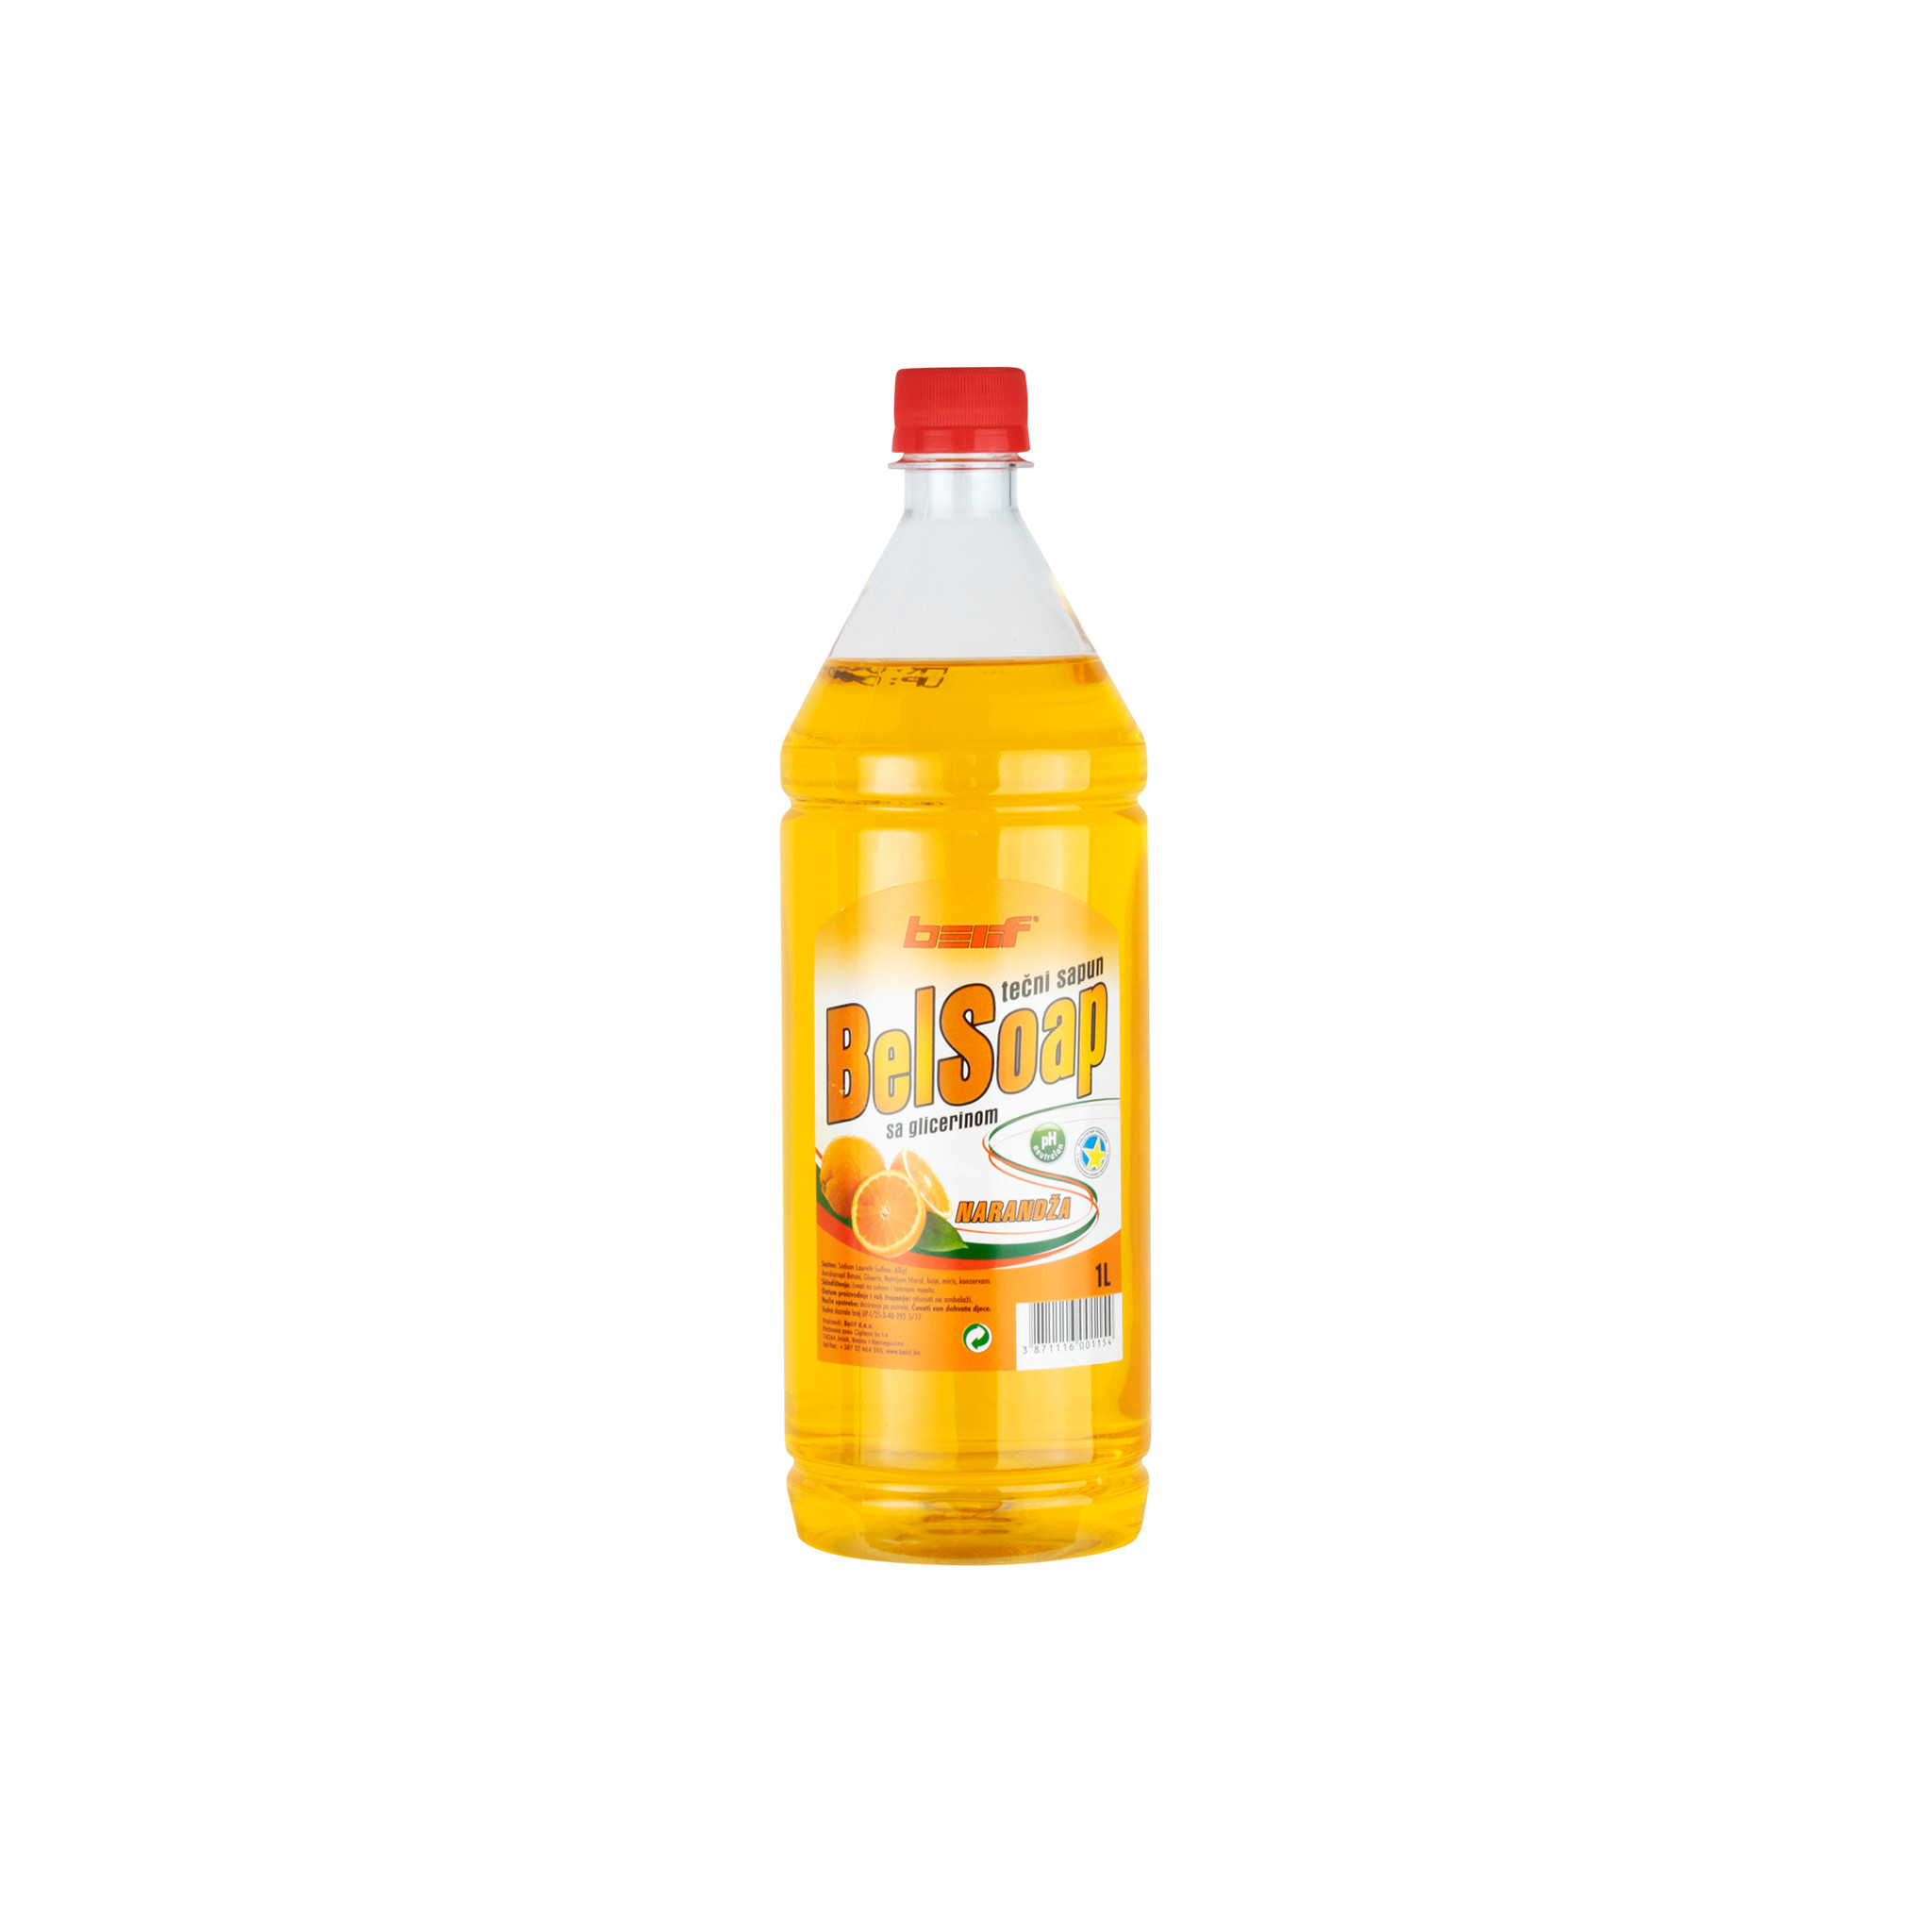 BelSoap tečni sapun narandža 1L